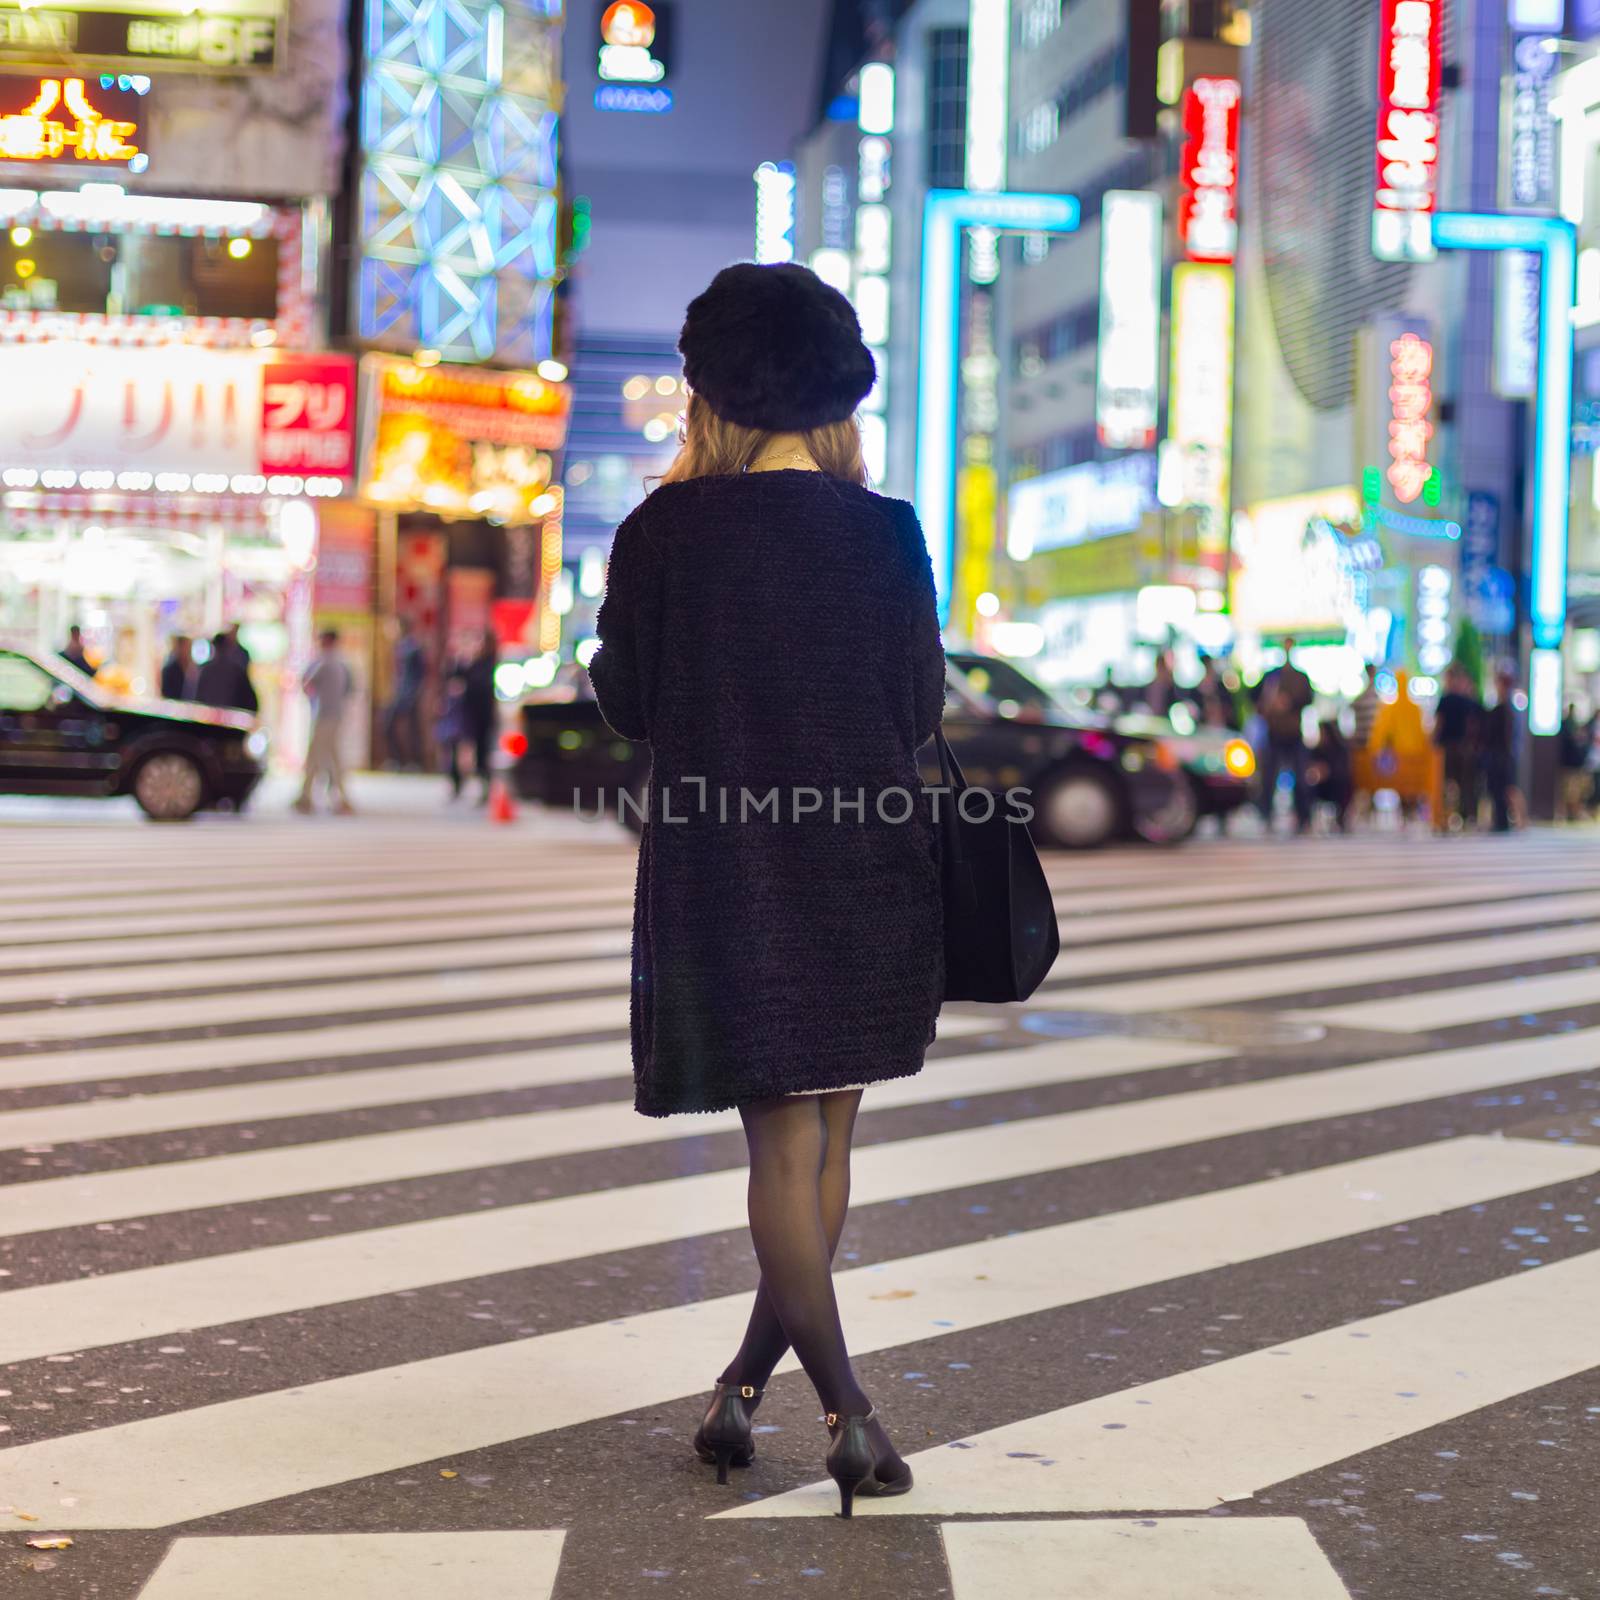 Solitary woman in Shinjuku, Tokyo, Japan. by kasto